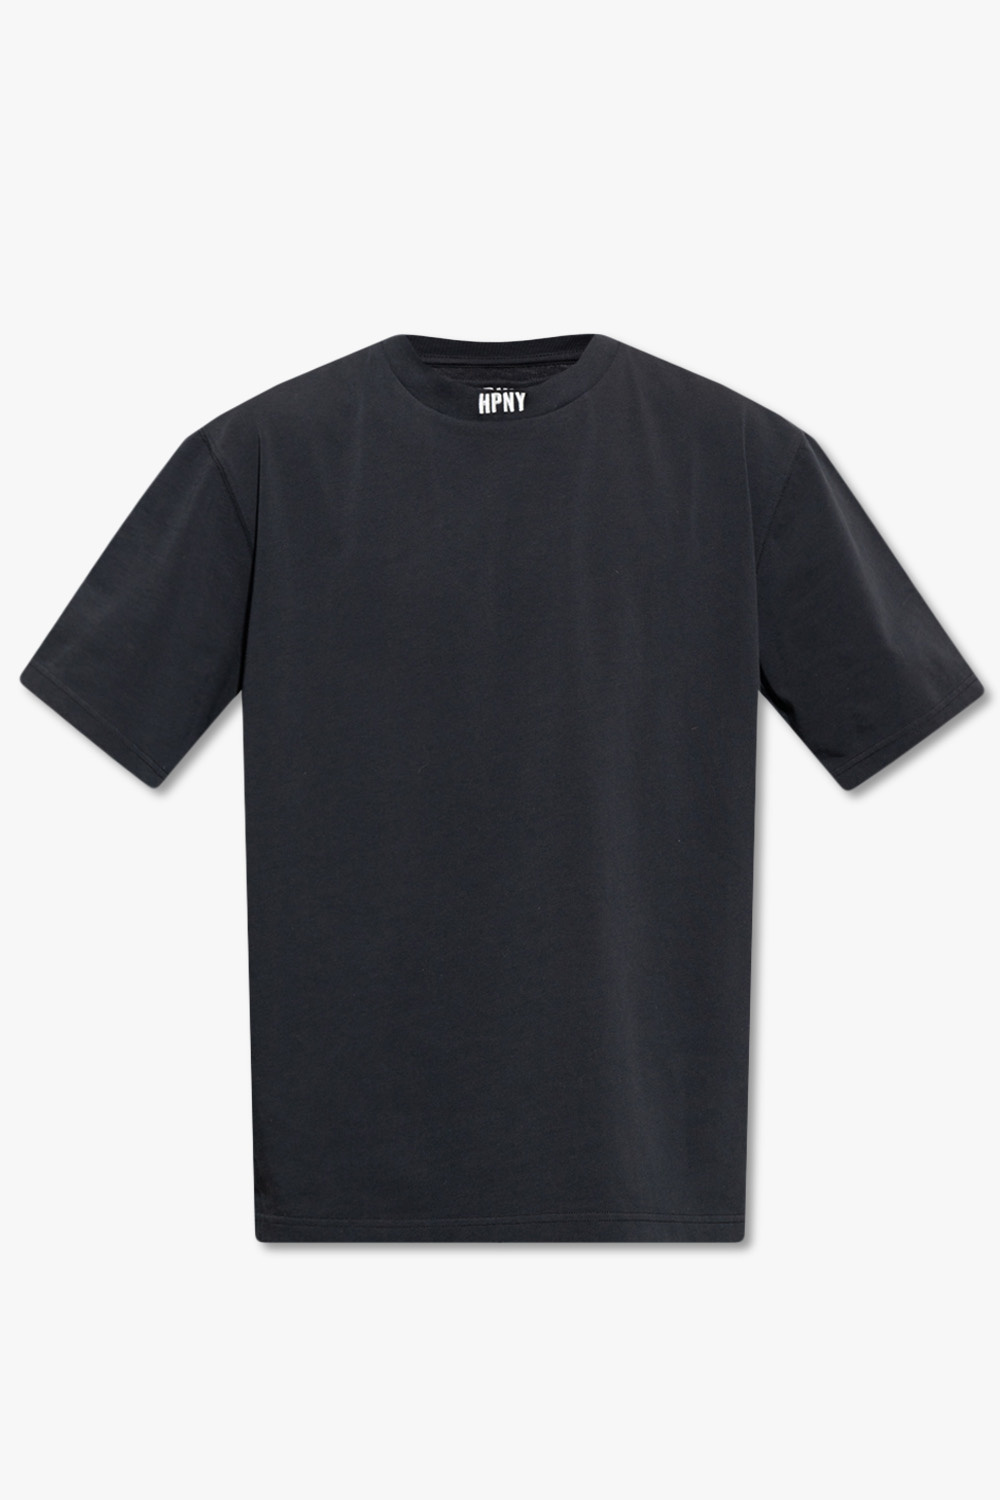 Heron Preston x Emilio Pucci T-shirt PATTERNED mit Logo Grau